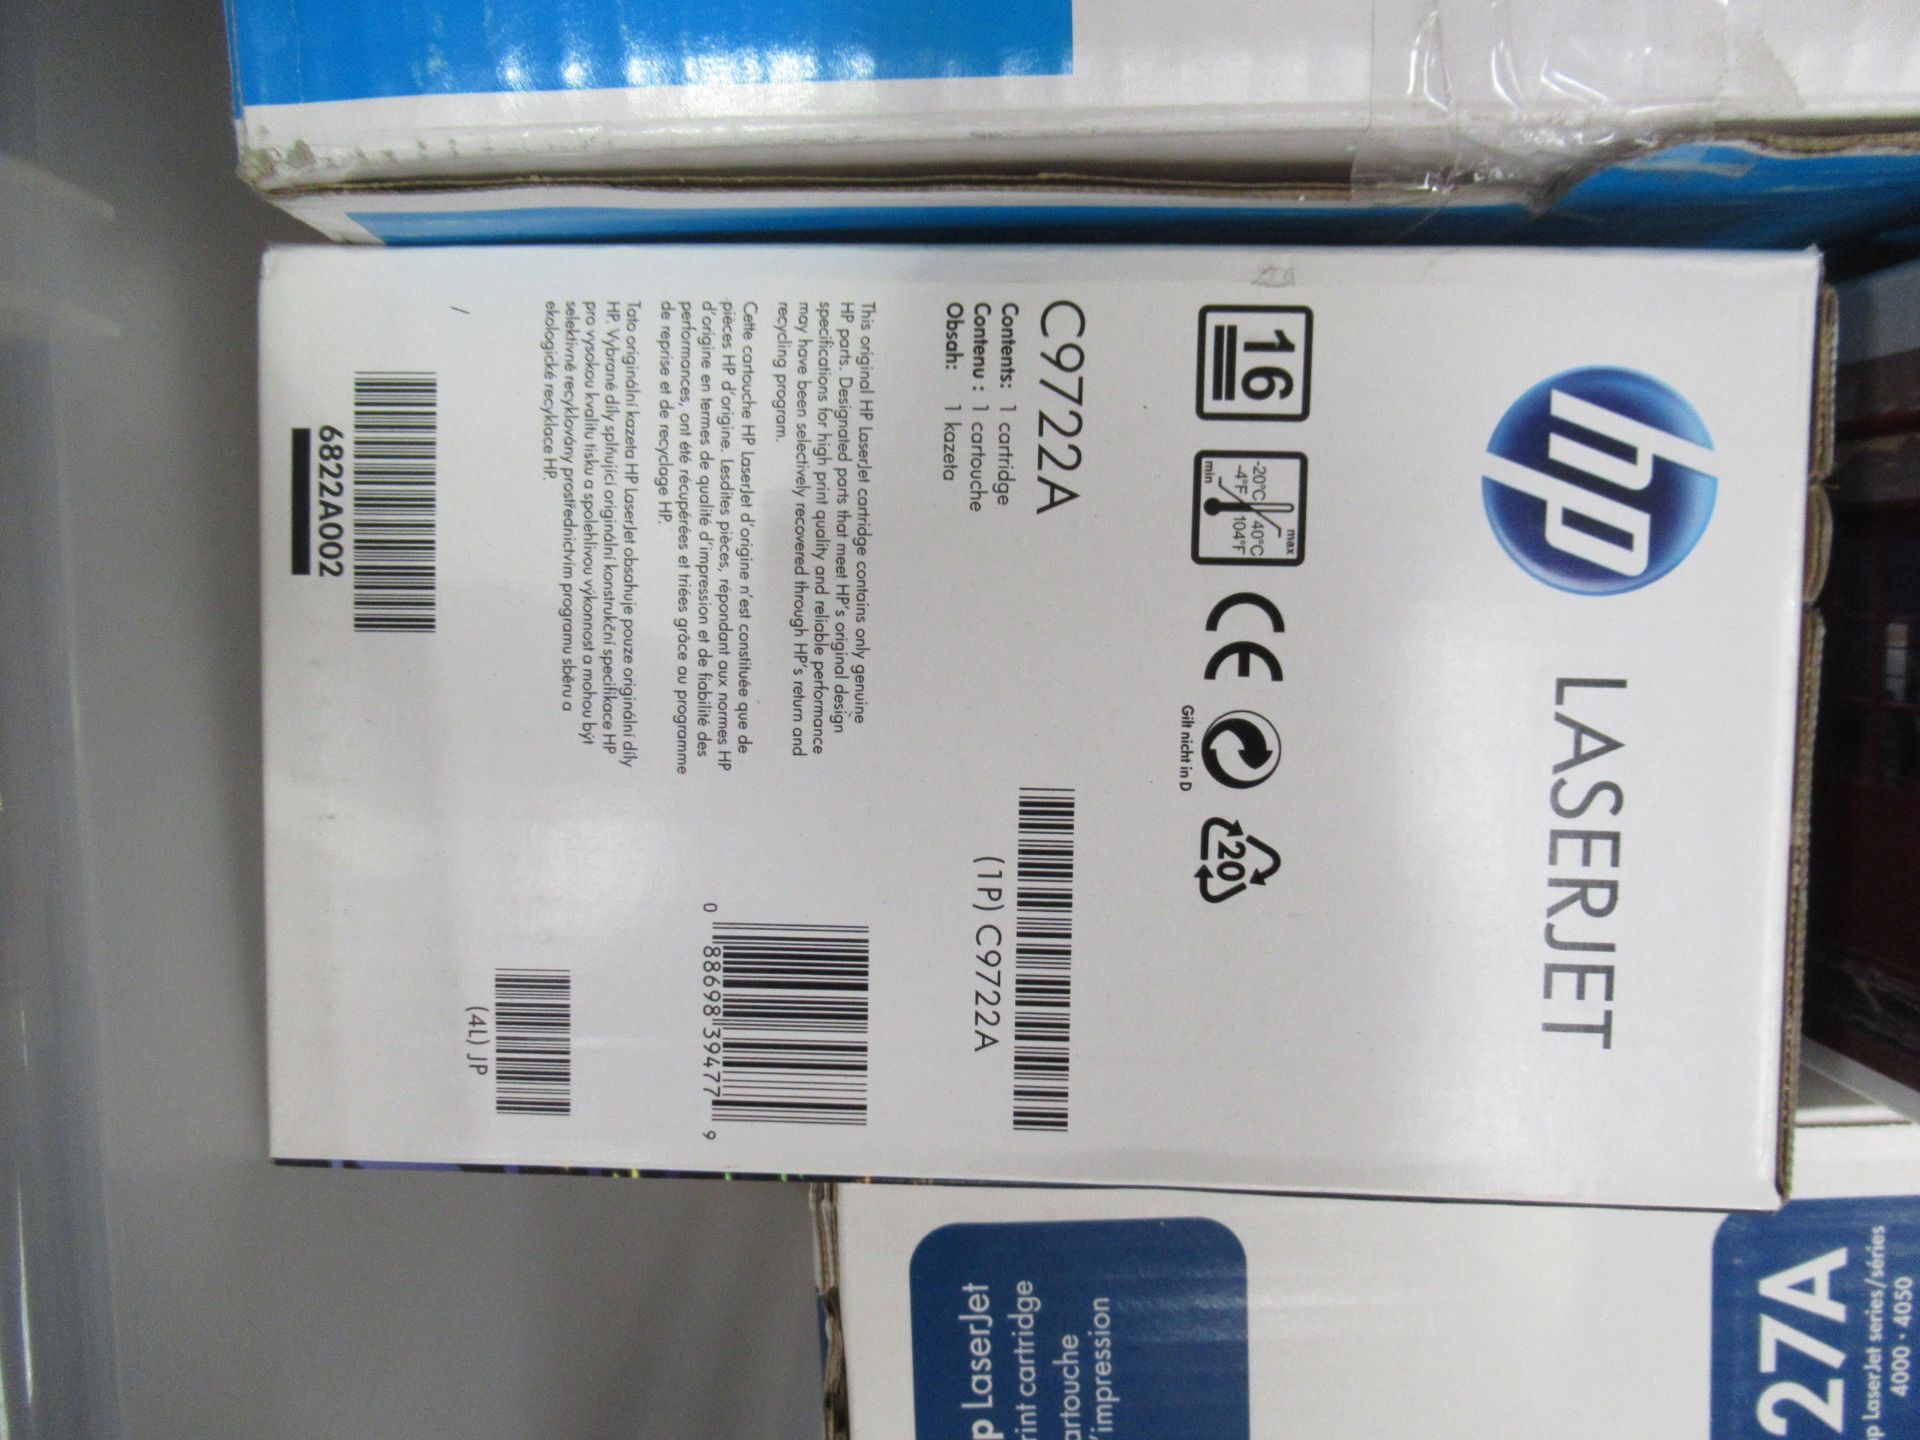 4 various HP LaserJet ink cartridges to crate with HP LaserJet 5500 image transfer kit - Image 3 of 7